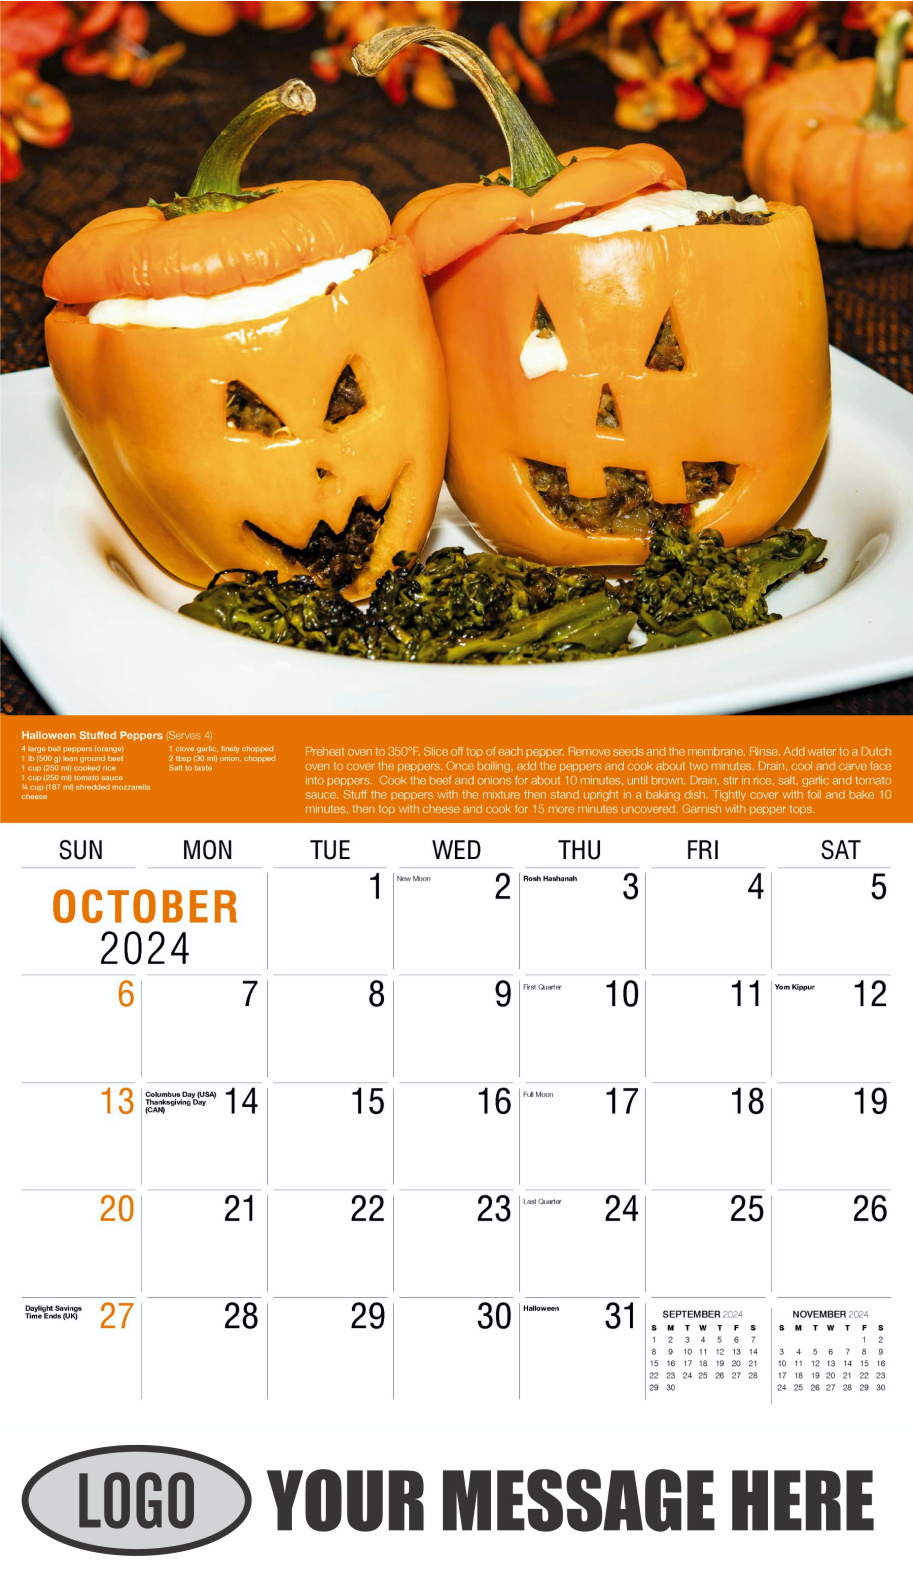 Recipes 2024 Business Promotional Calendar - October